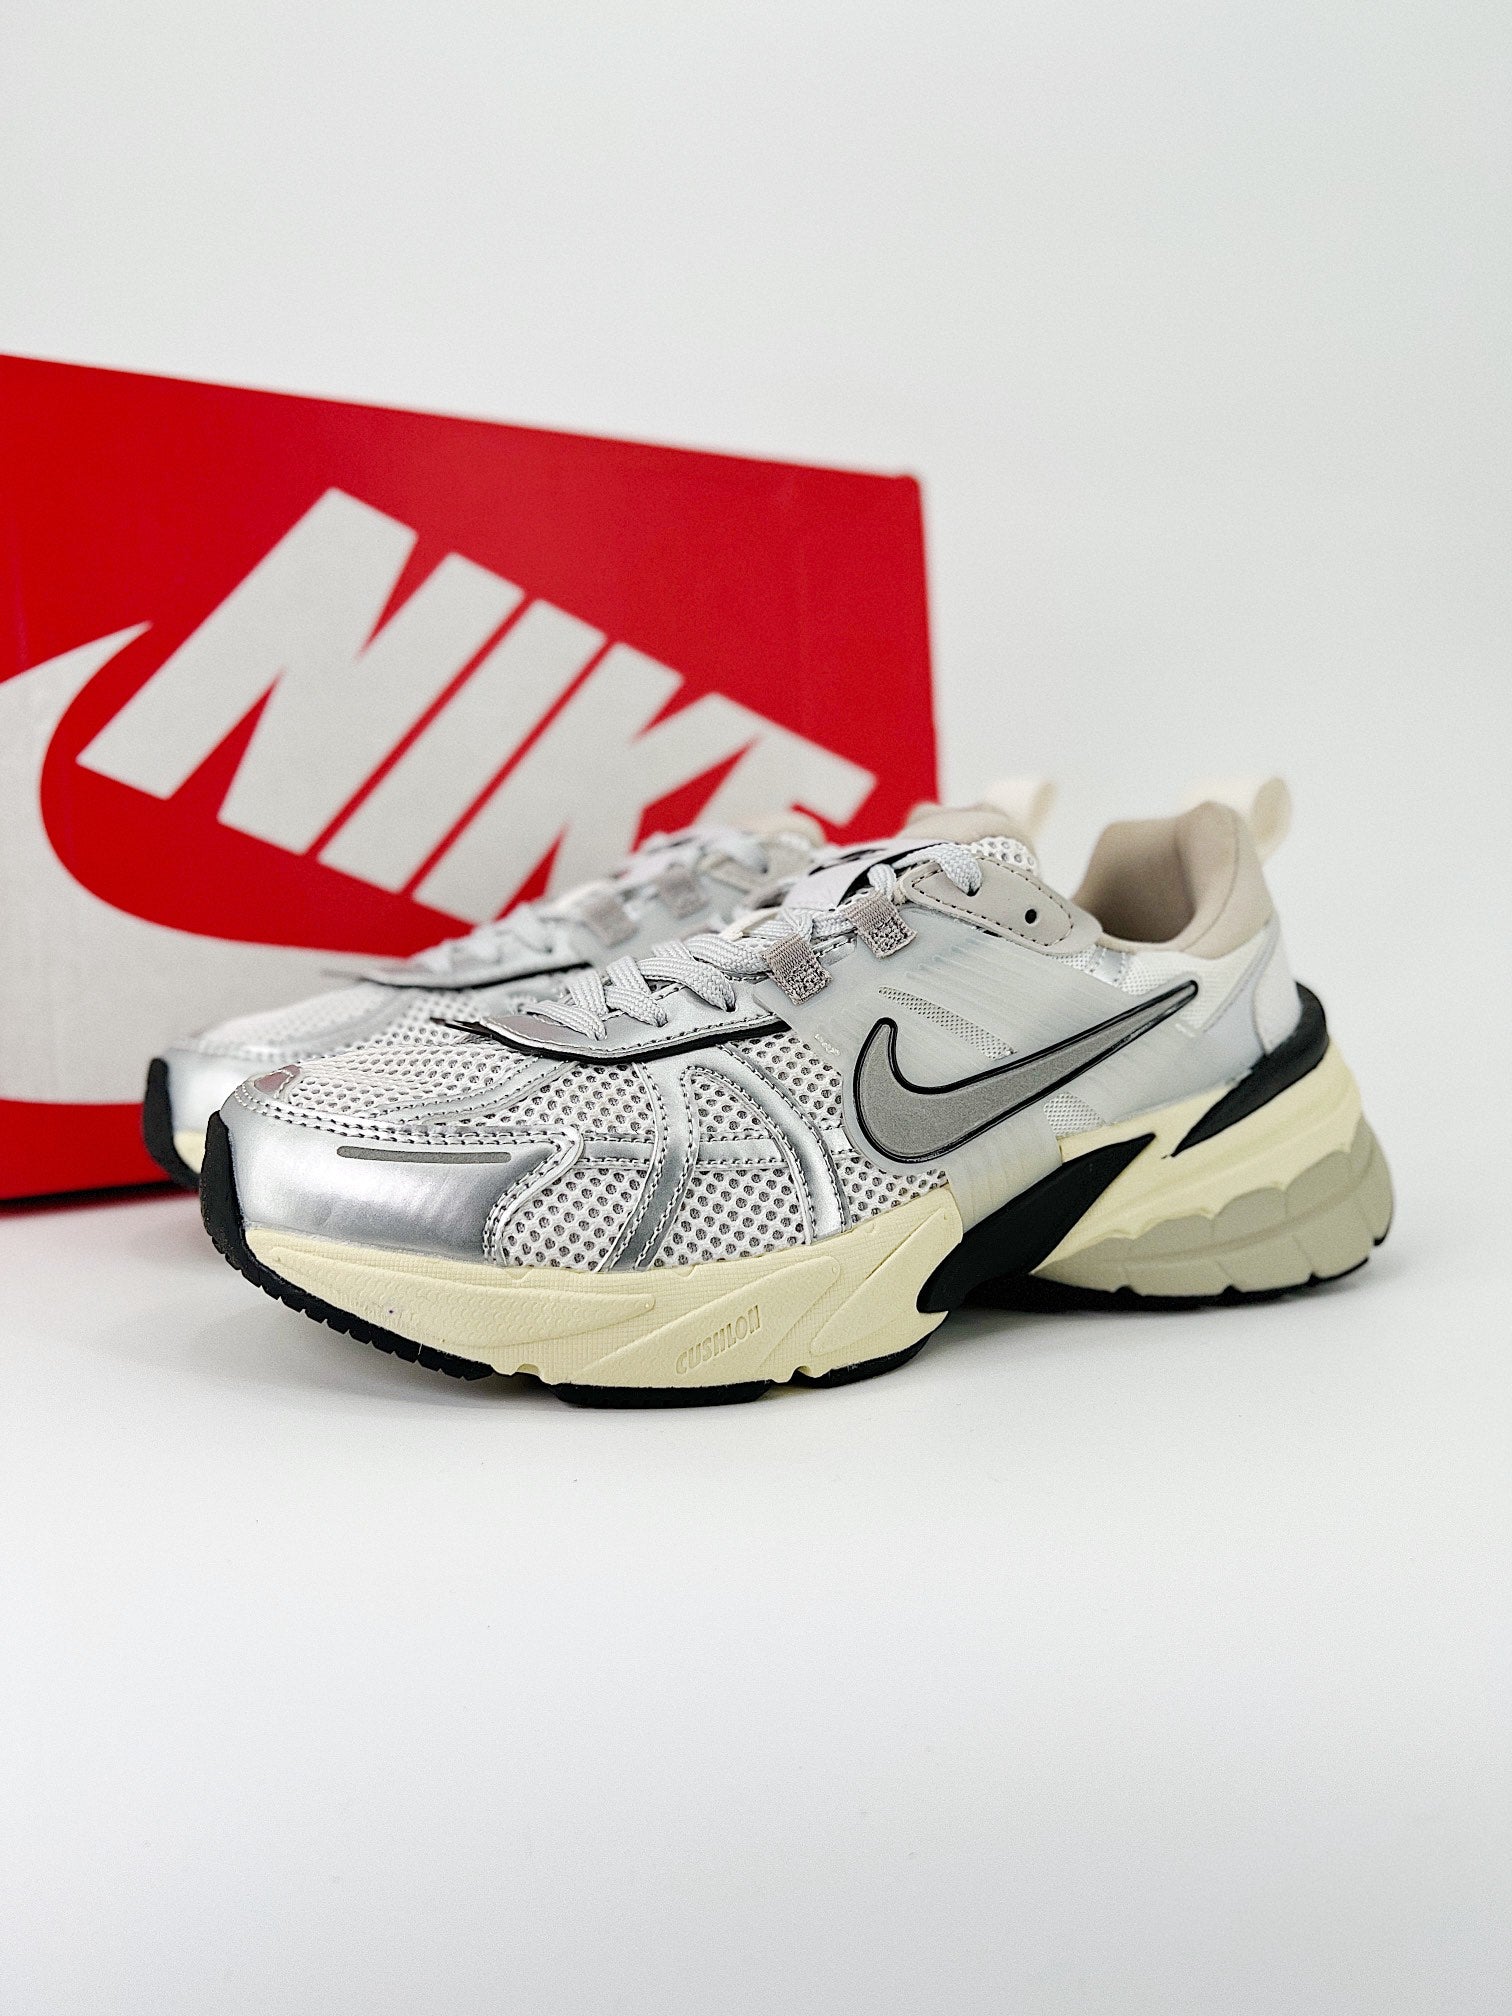 Nike V2k run silver beige